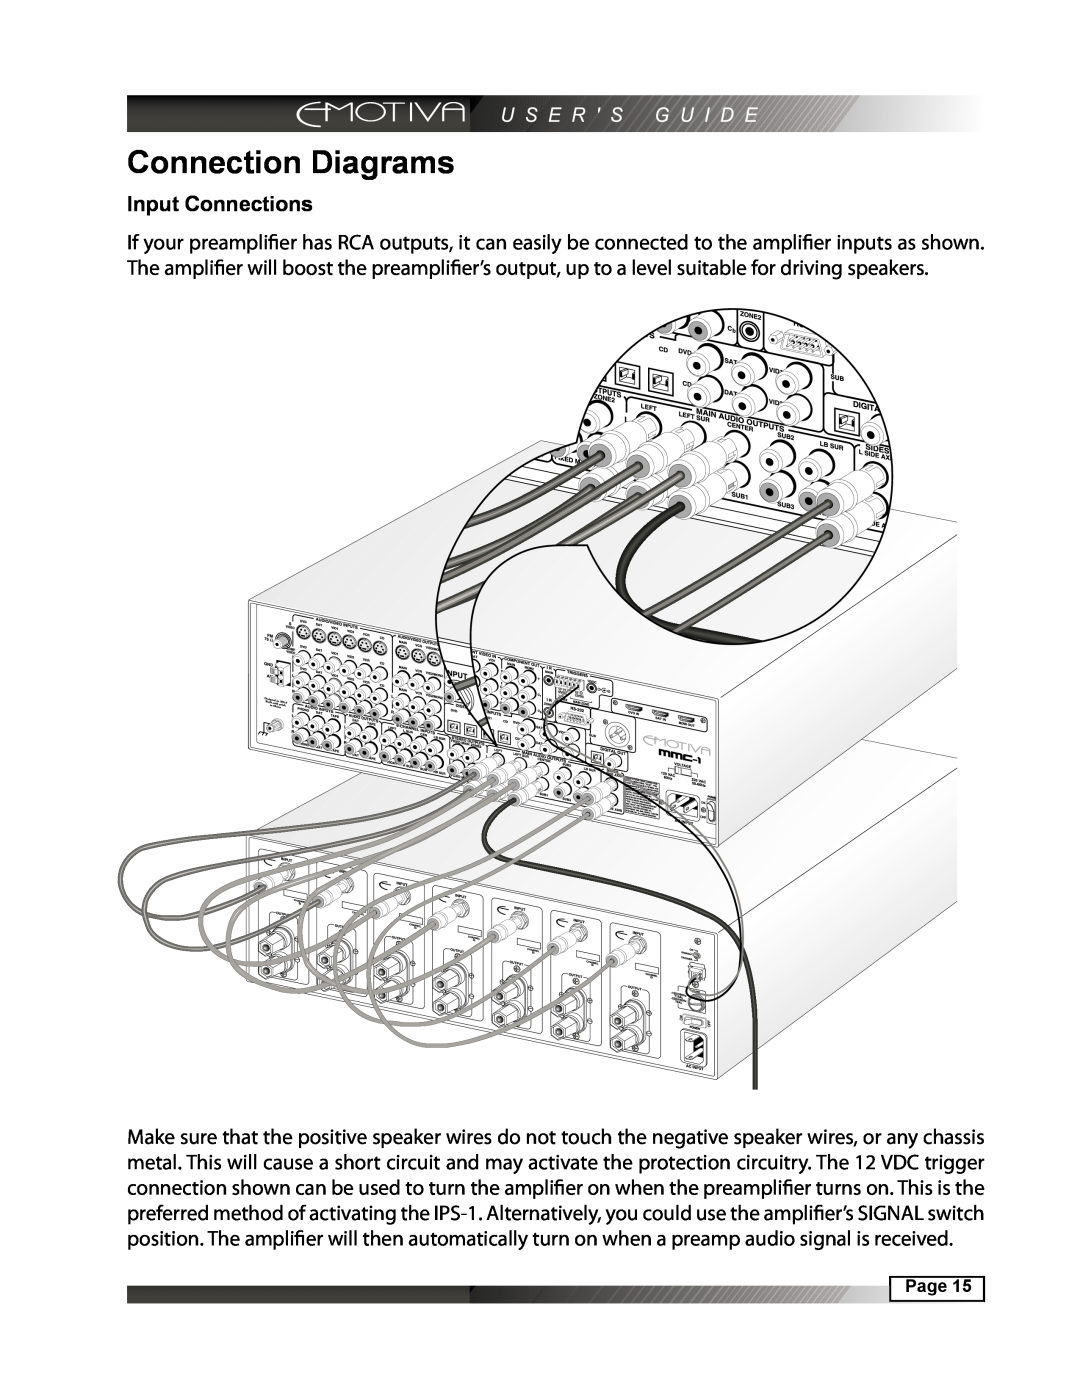 Emotiva IPS-1 manual Connection Diagrams 